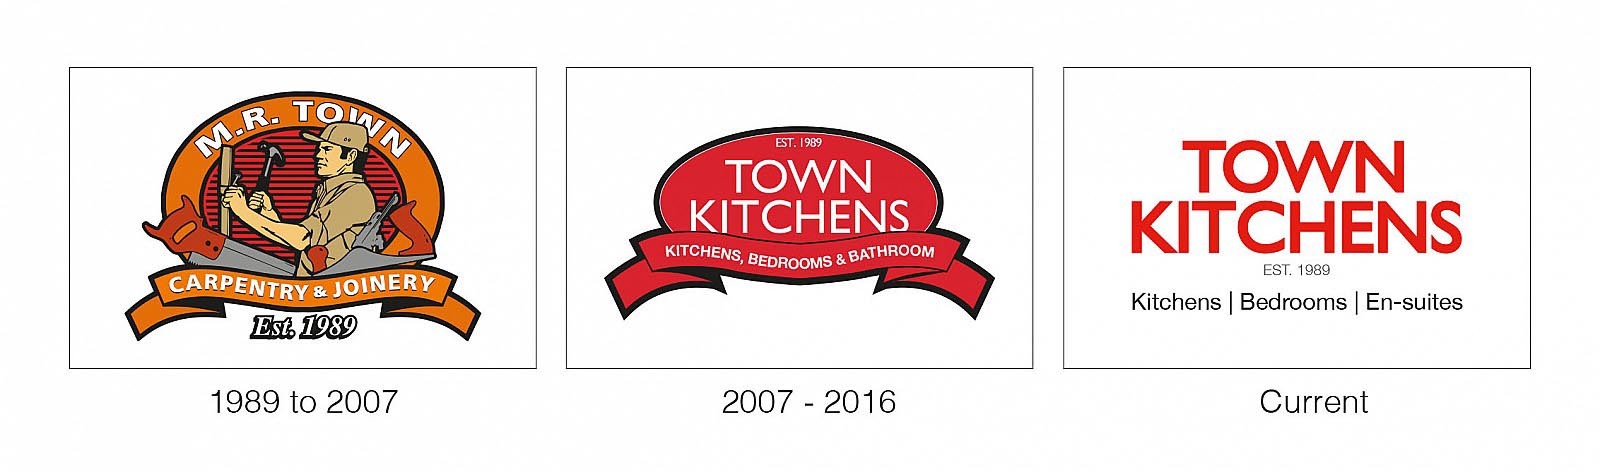 Town Kitchens Logos